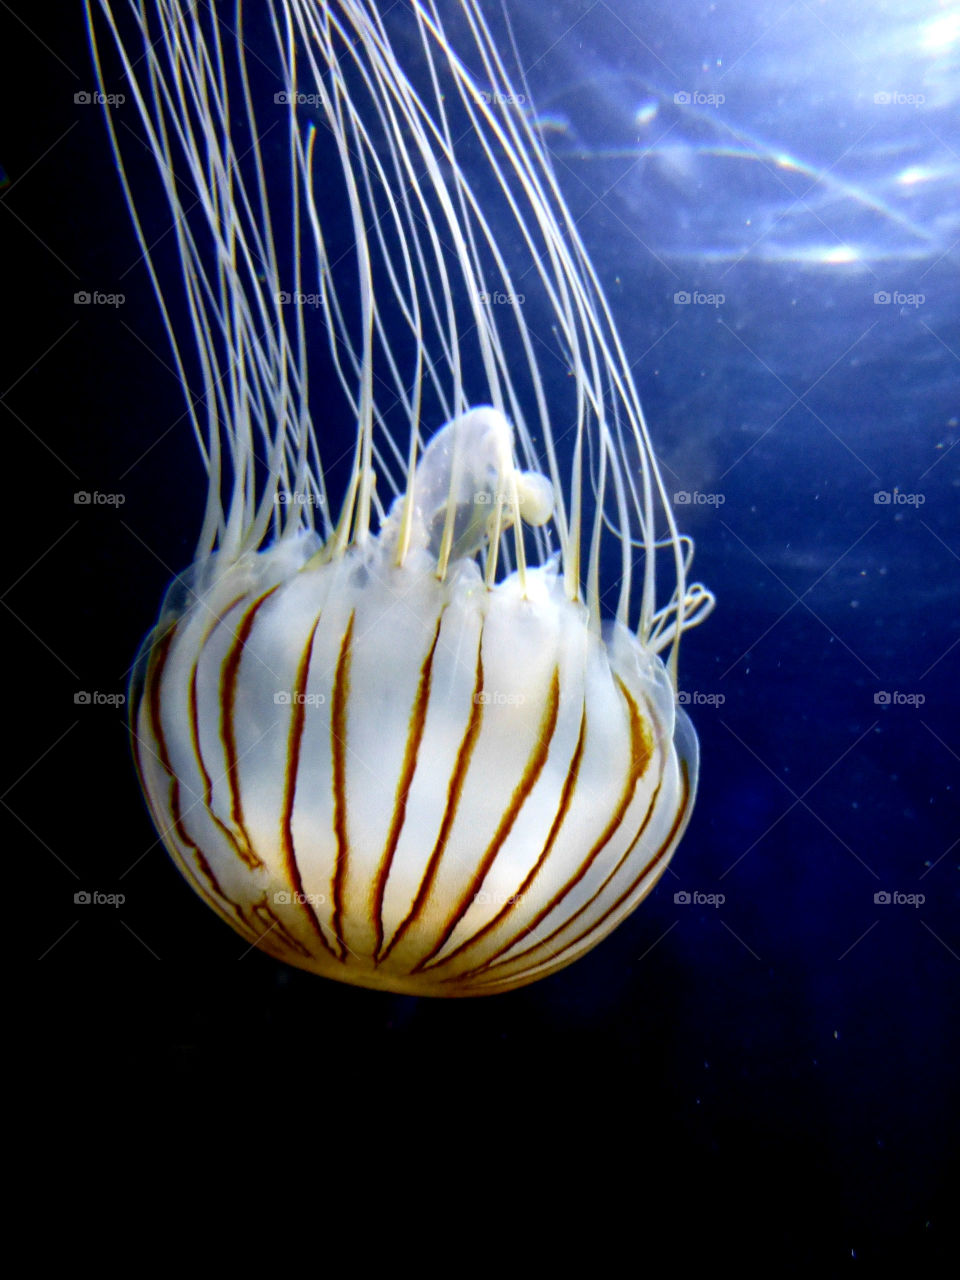 Jellyfish life!